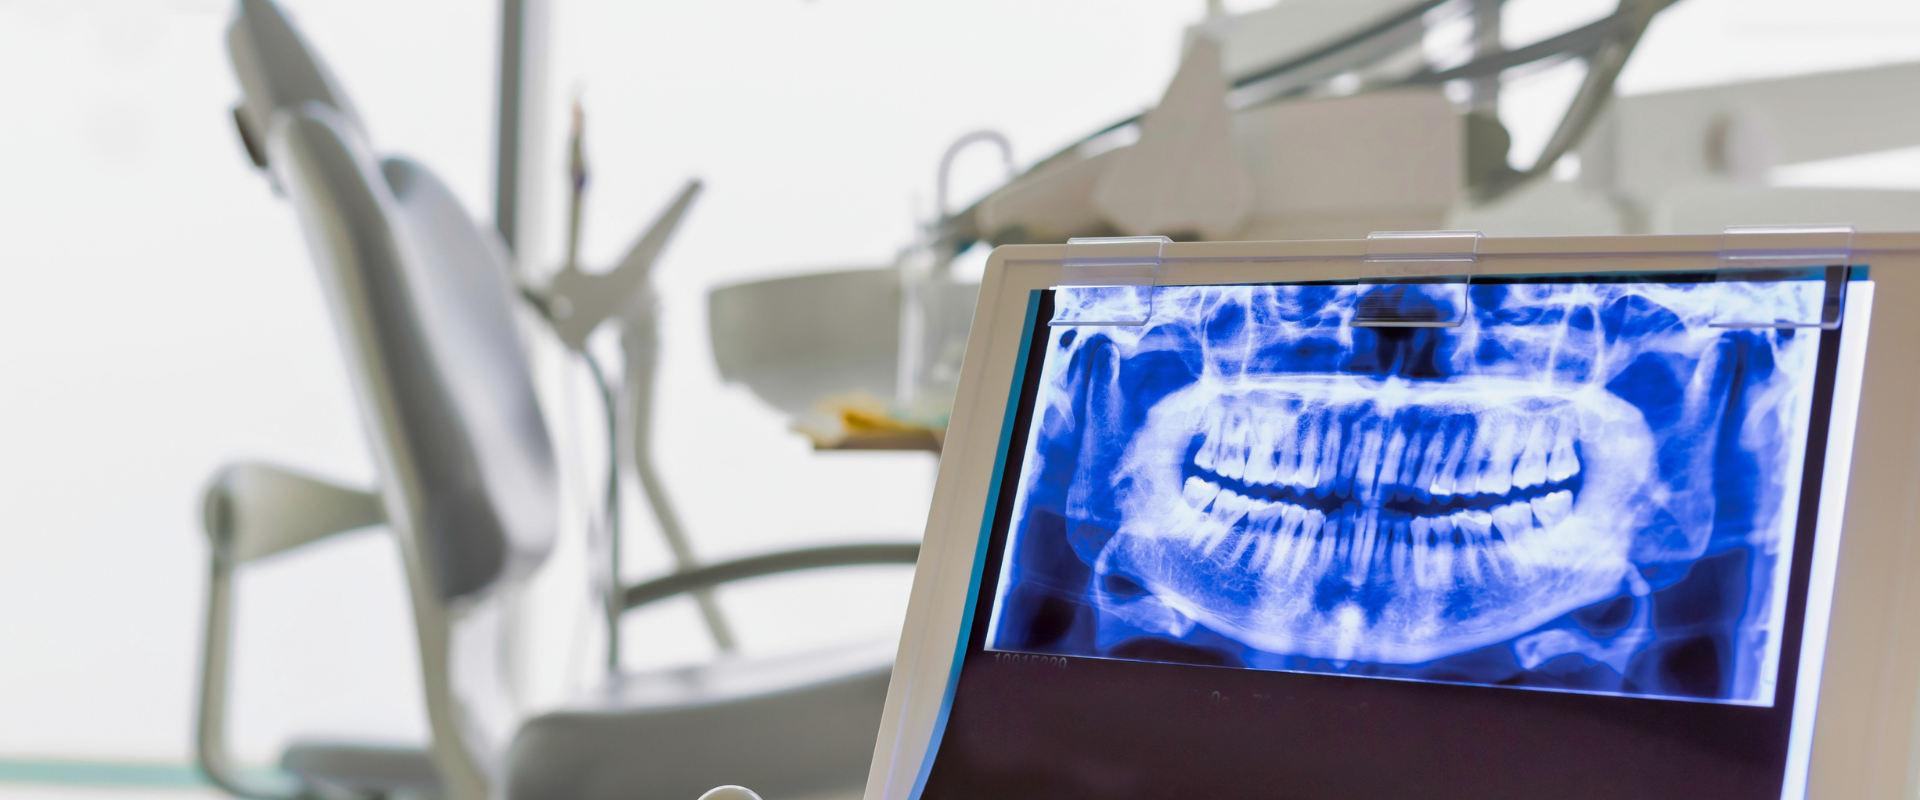 Dental billing and CDT codes